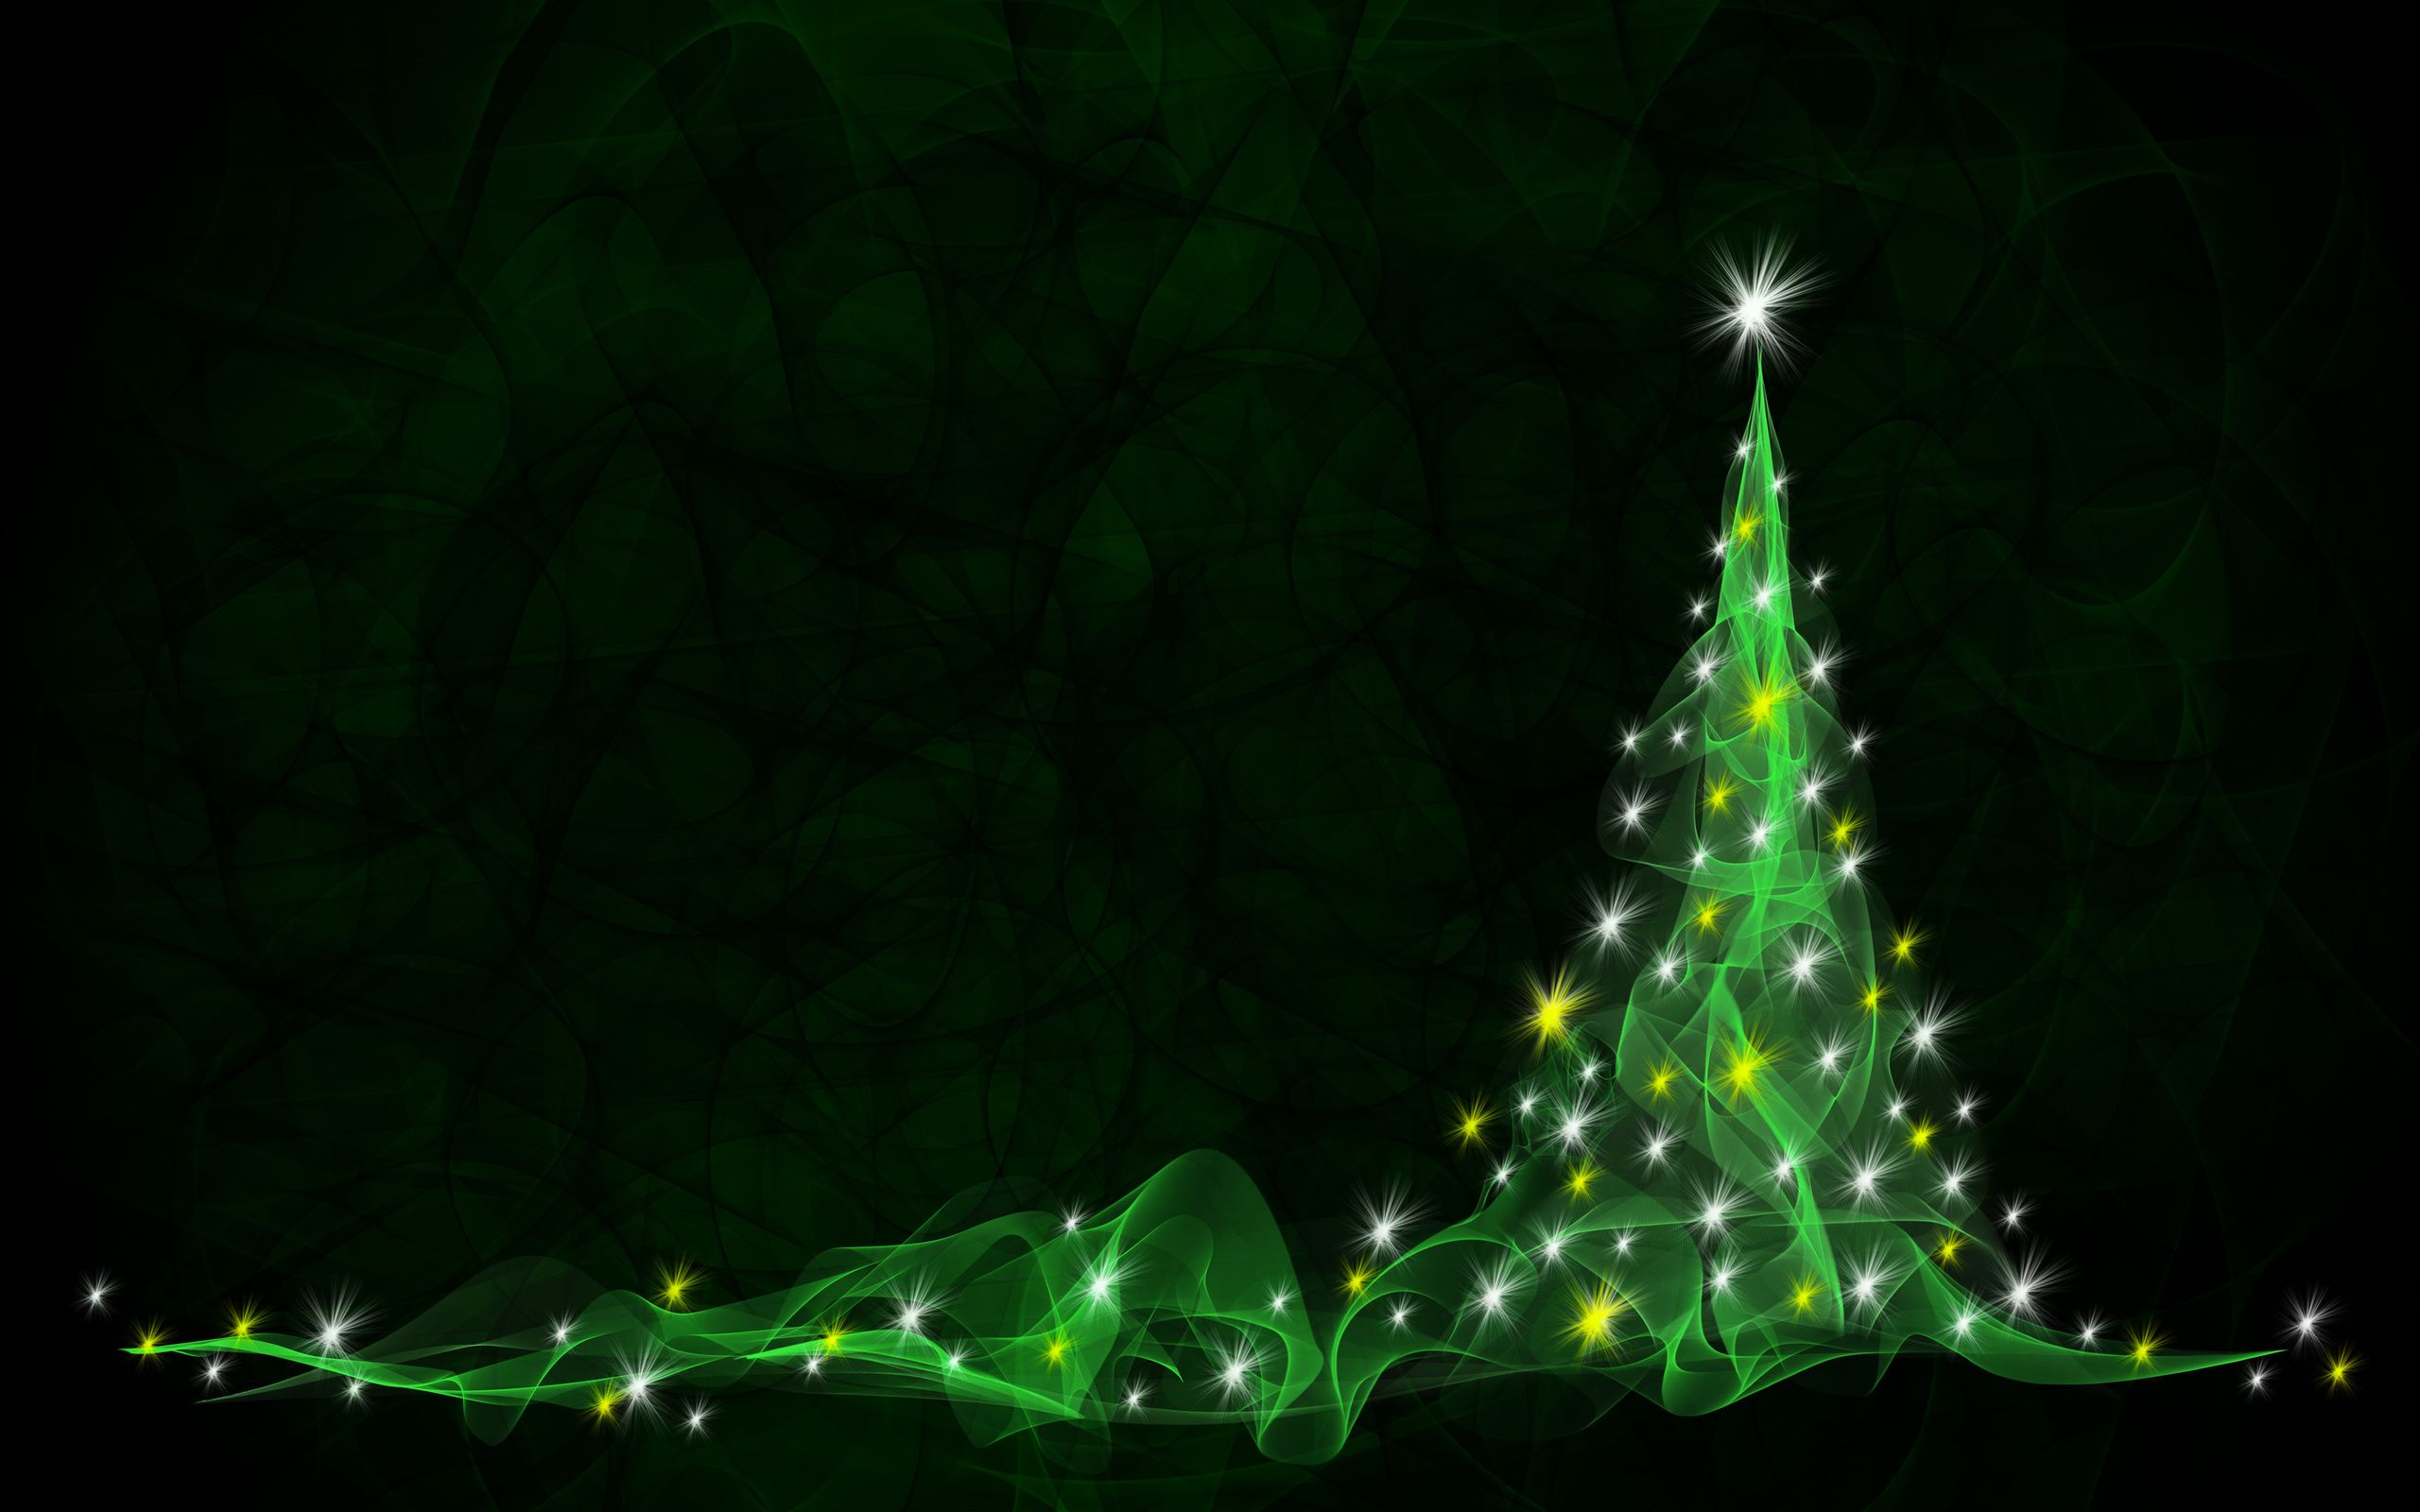 Green Christmas Tree Artwork Wallpaper free desktop background and wallpaper